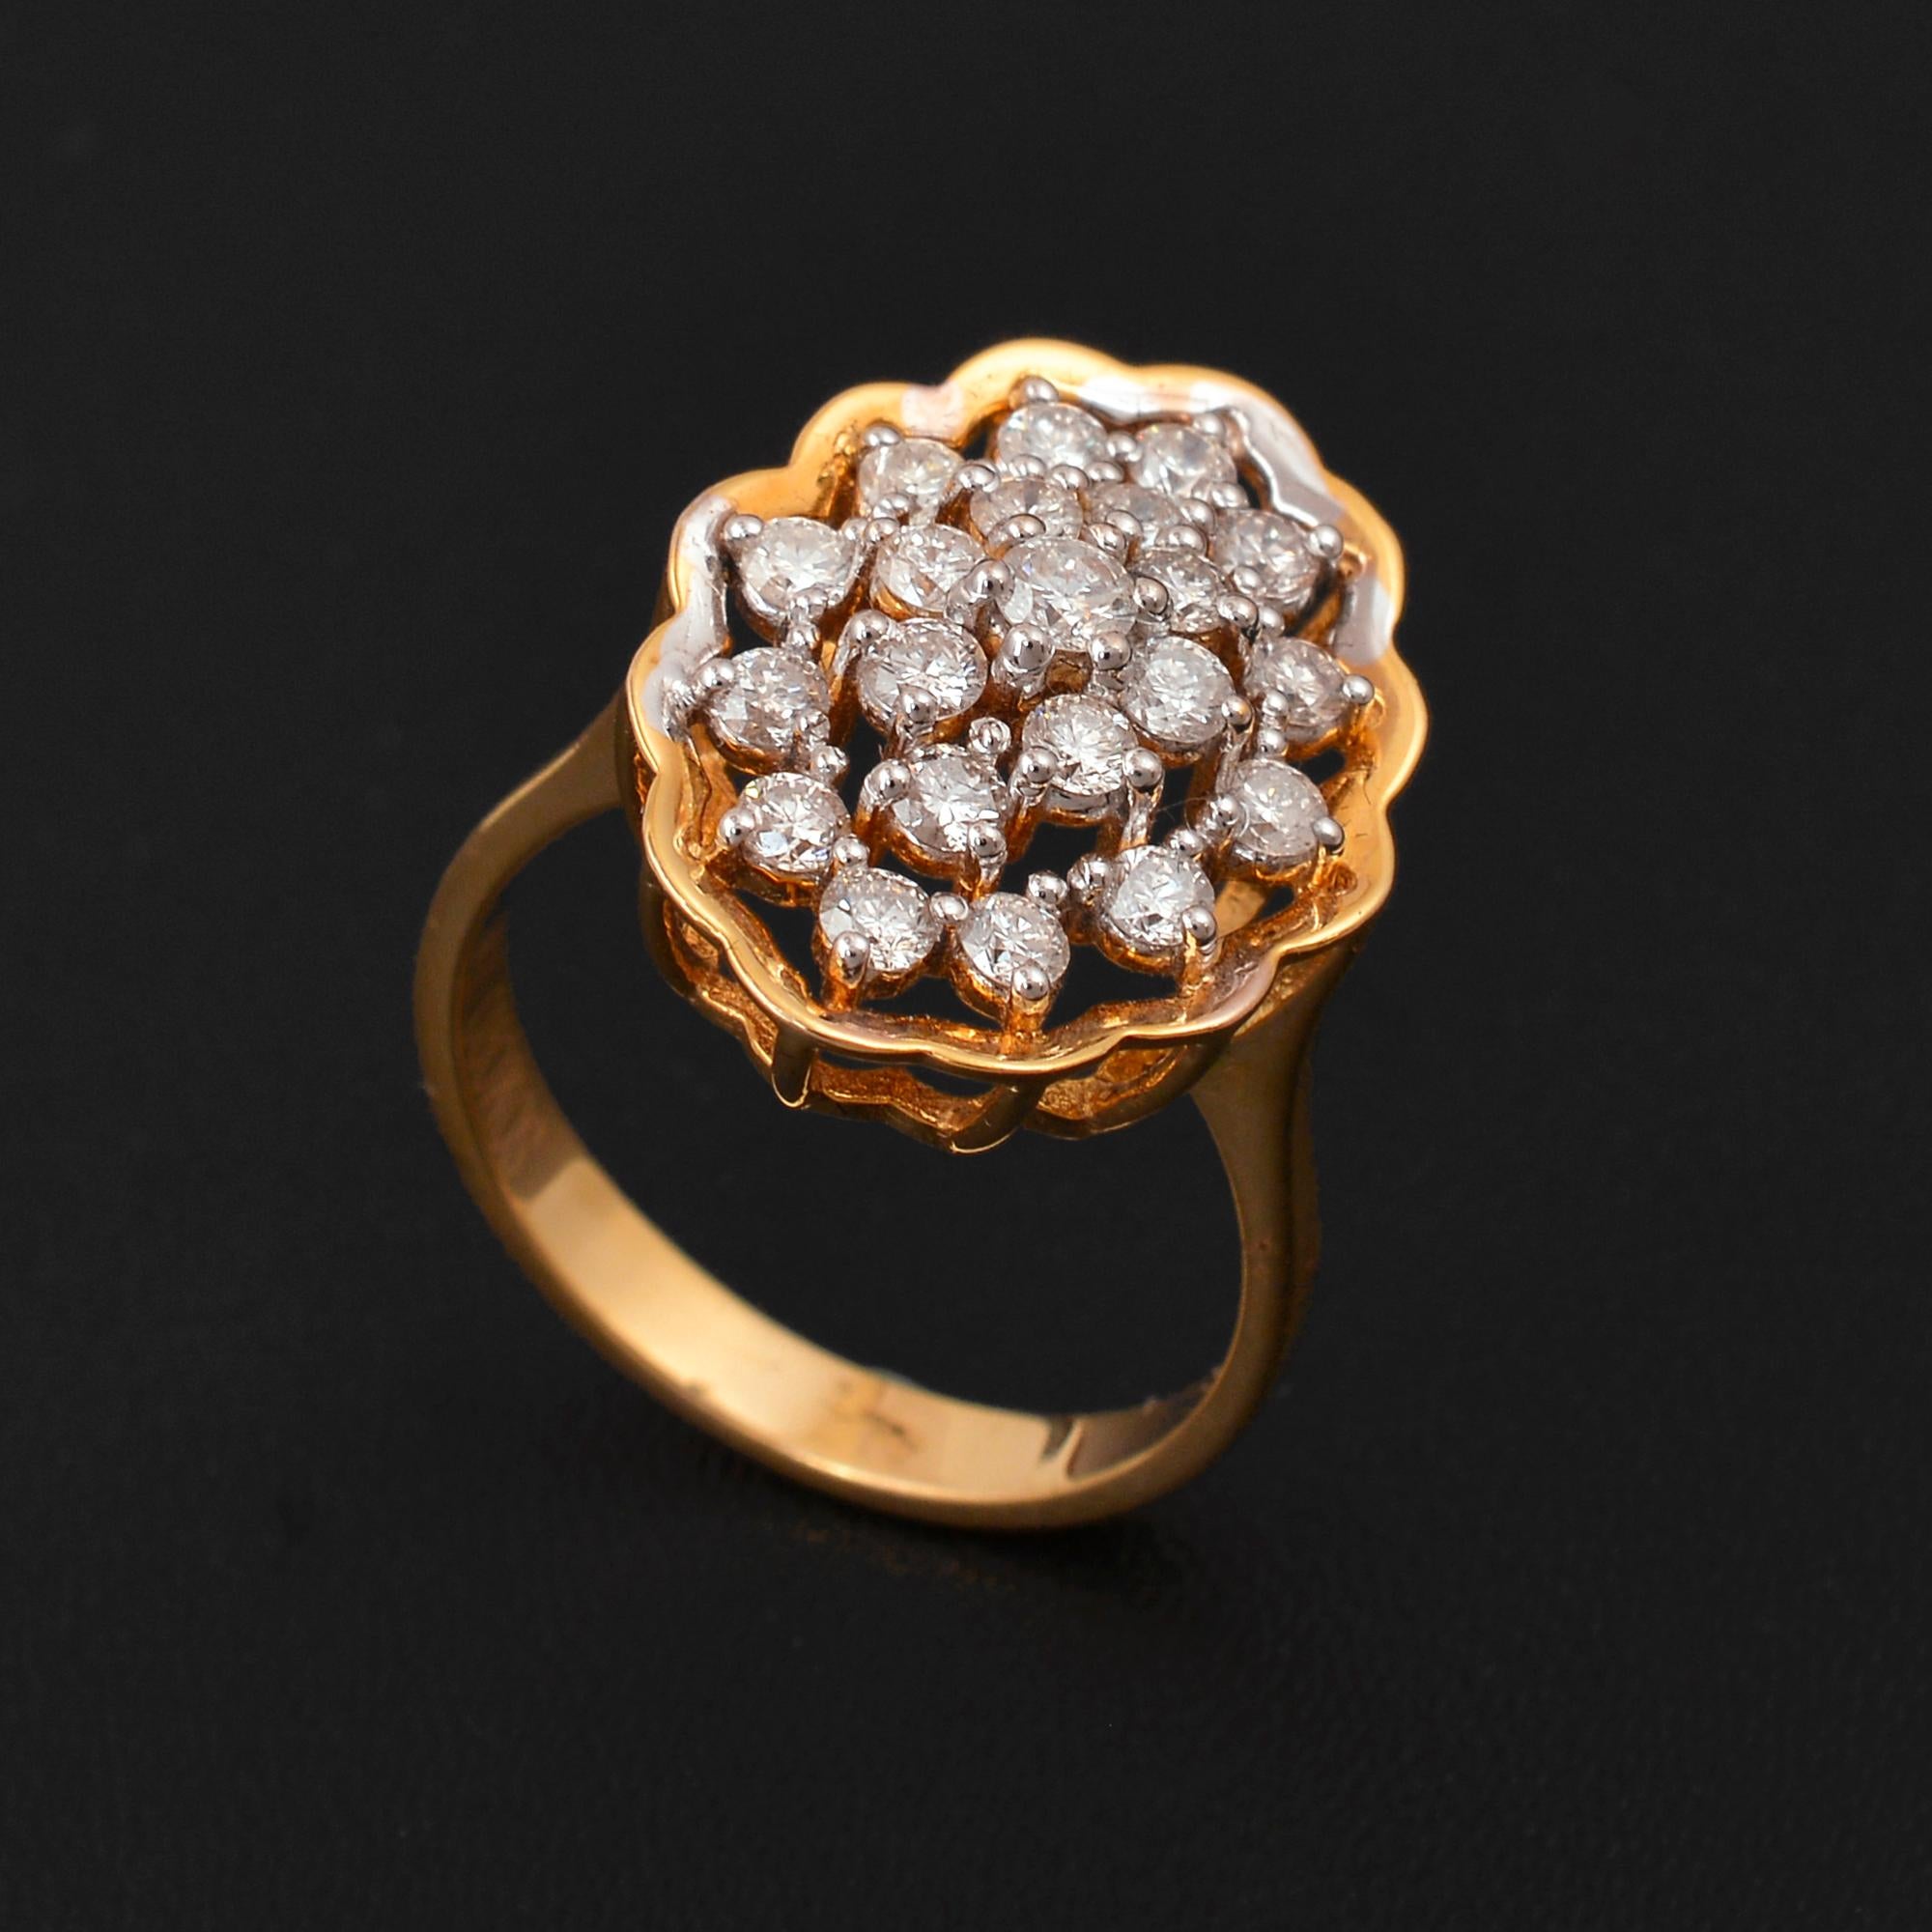 Taille ronde 1.10 Carat Diamond Flower Design Ring 18 Karat Rose Gold Handmade Fine Jewelry (Bague à motif de fleur en or rose 18 carats) en vente